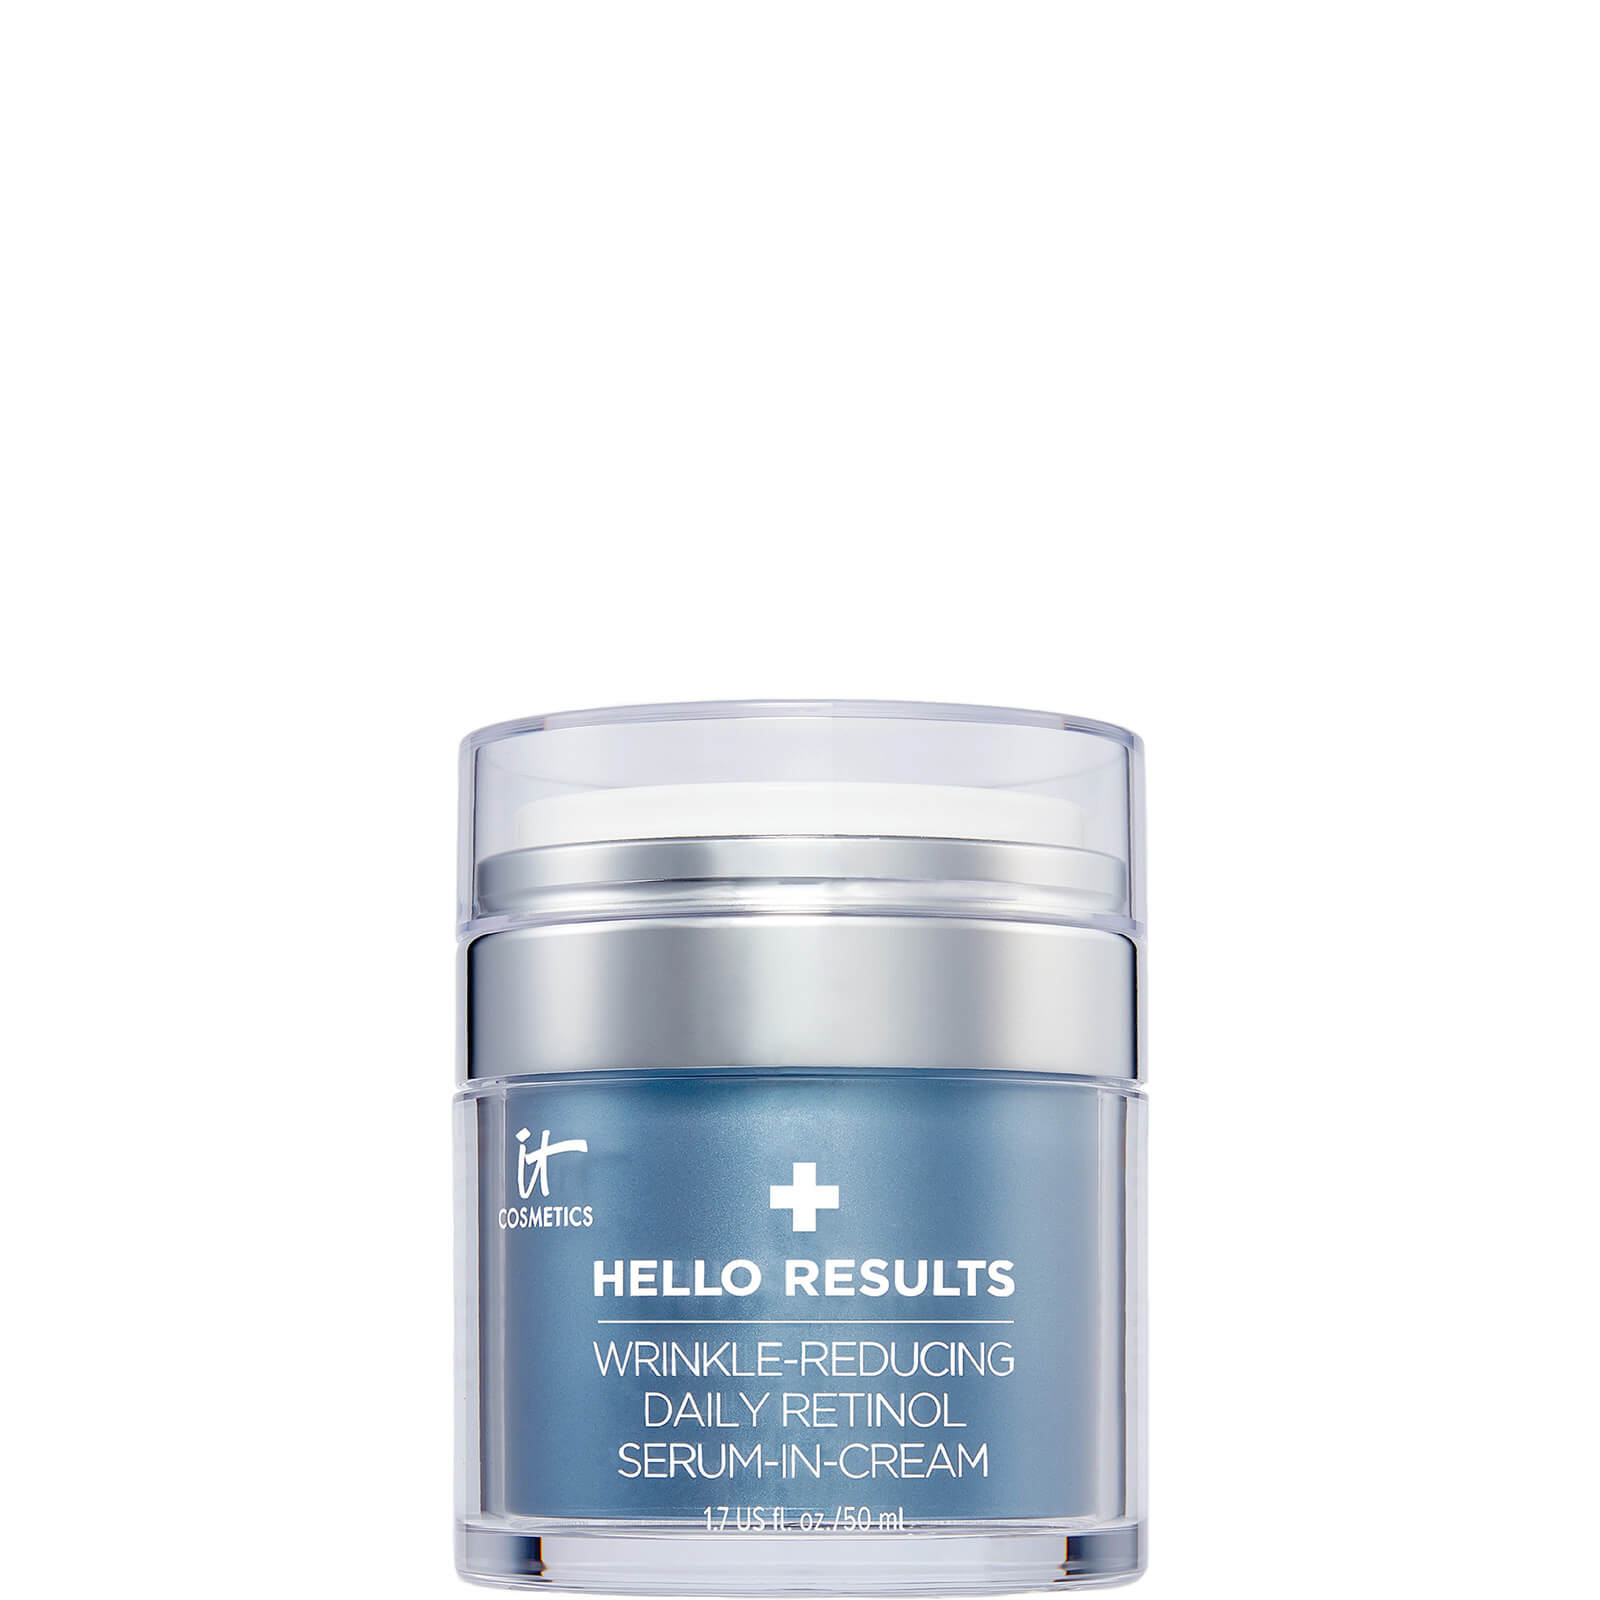 IT Cosmetics Hello Results Wrinkle-Reducing Daily Retinol Cream (Various Sizes) - 50ml